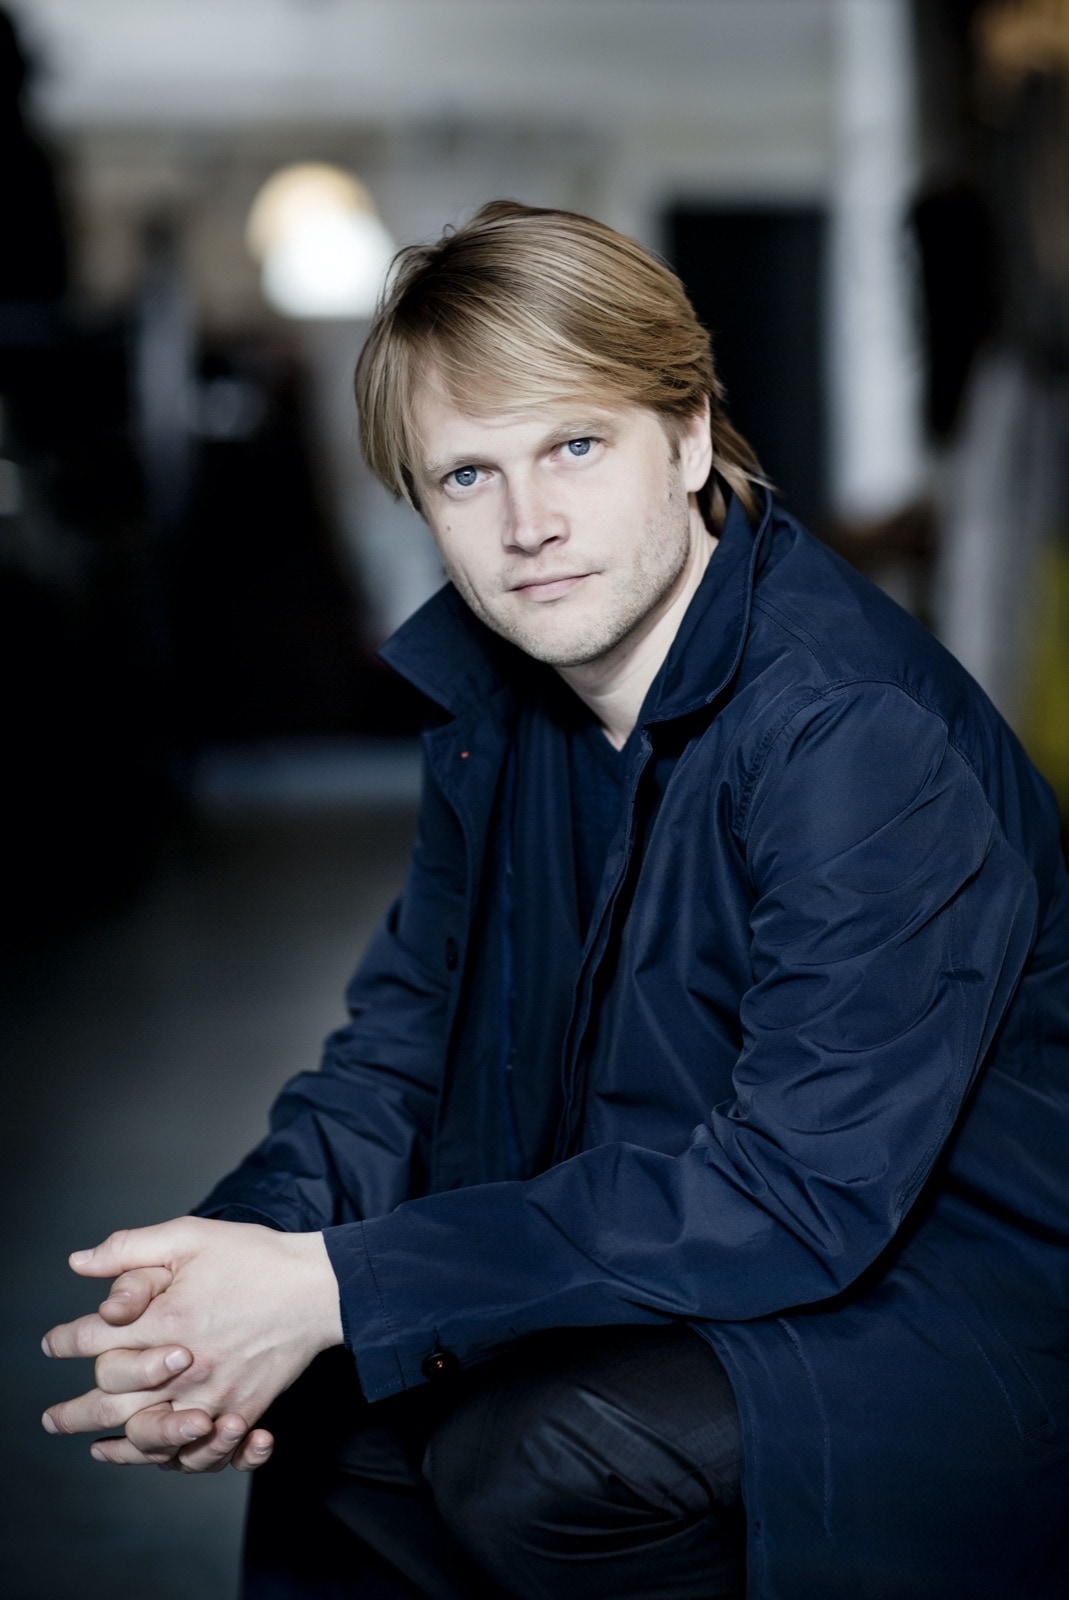 Bas Wiegers-Dirigent
Photo: Marco Borggreve